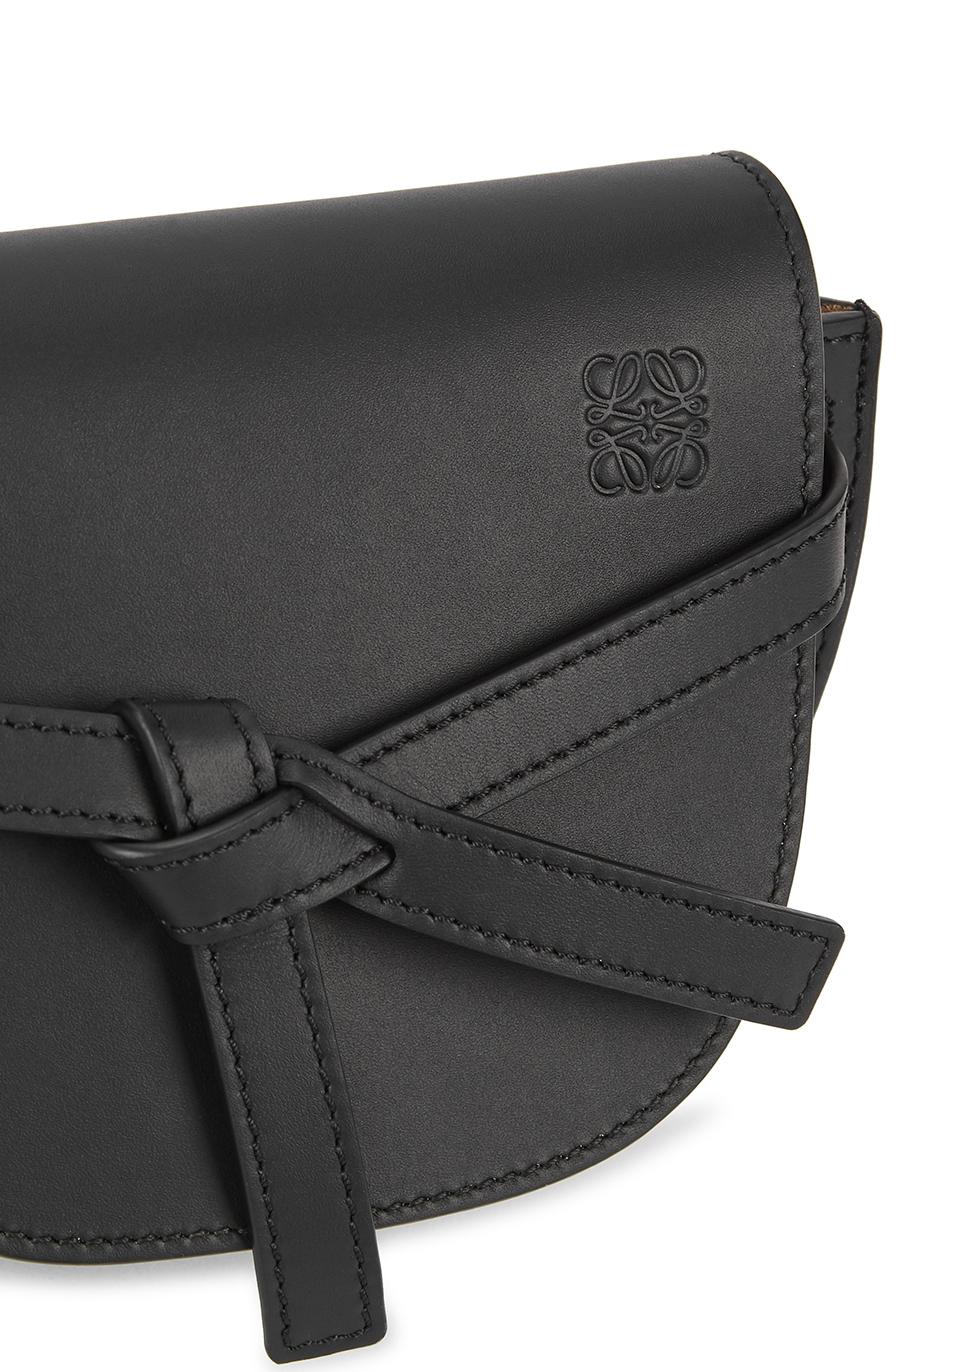 Black Gate mini leather cross-body bag, LOEWE